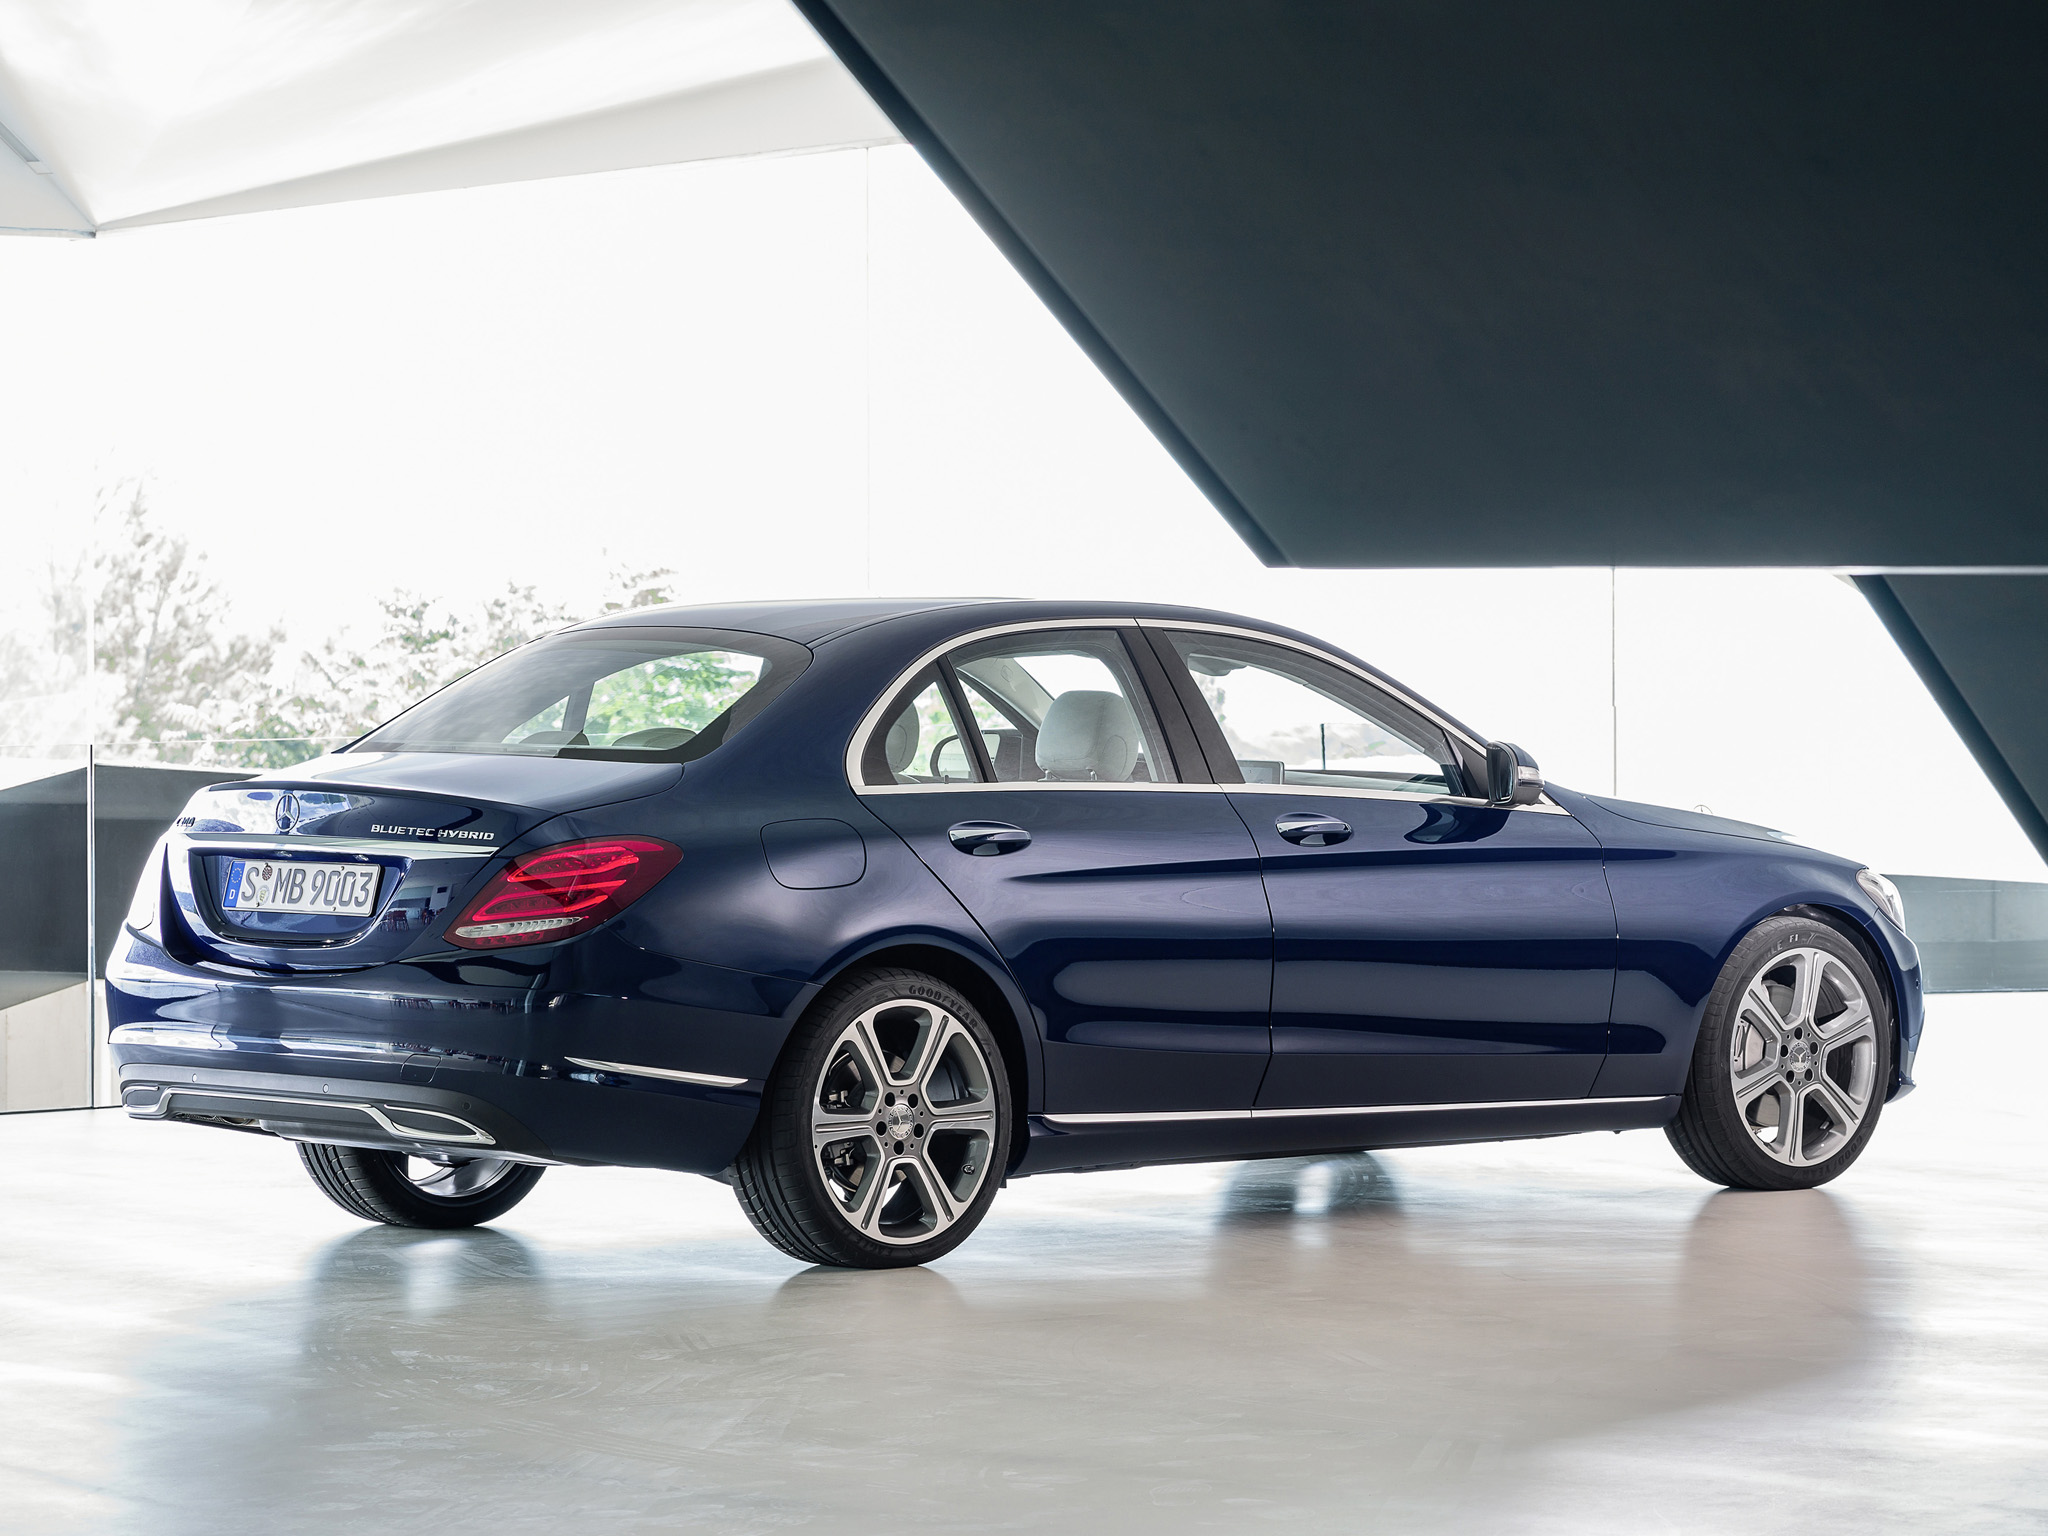 2014, Mercedes, Benz, C300, Bluetec, Hybrid, Exclusive